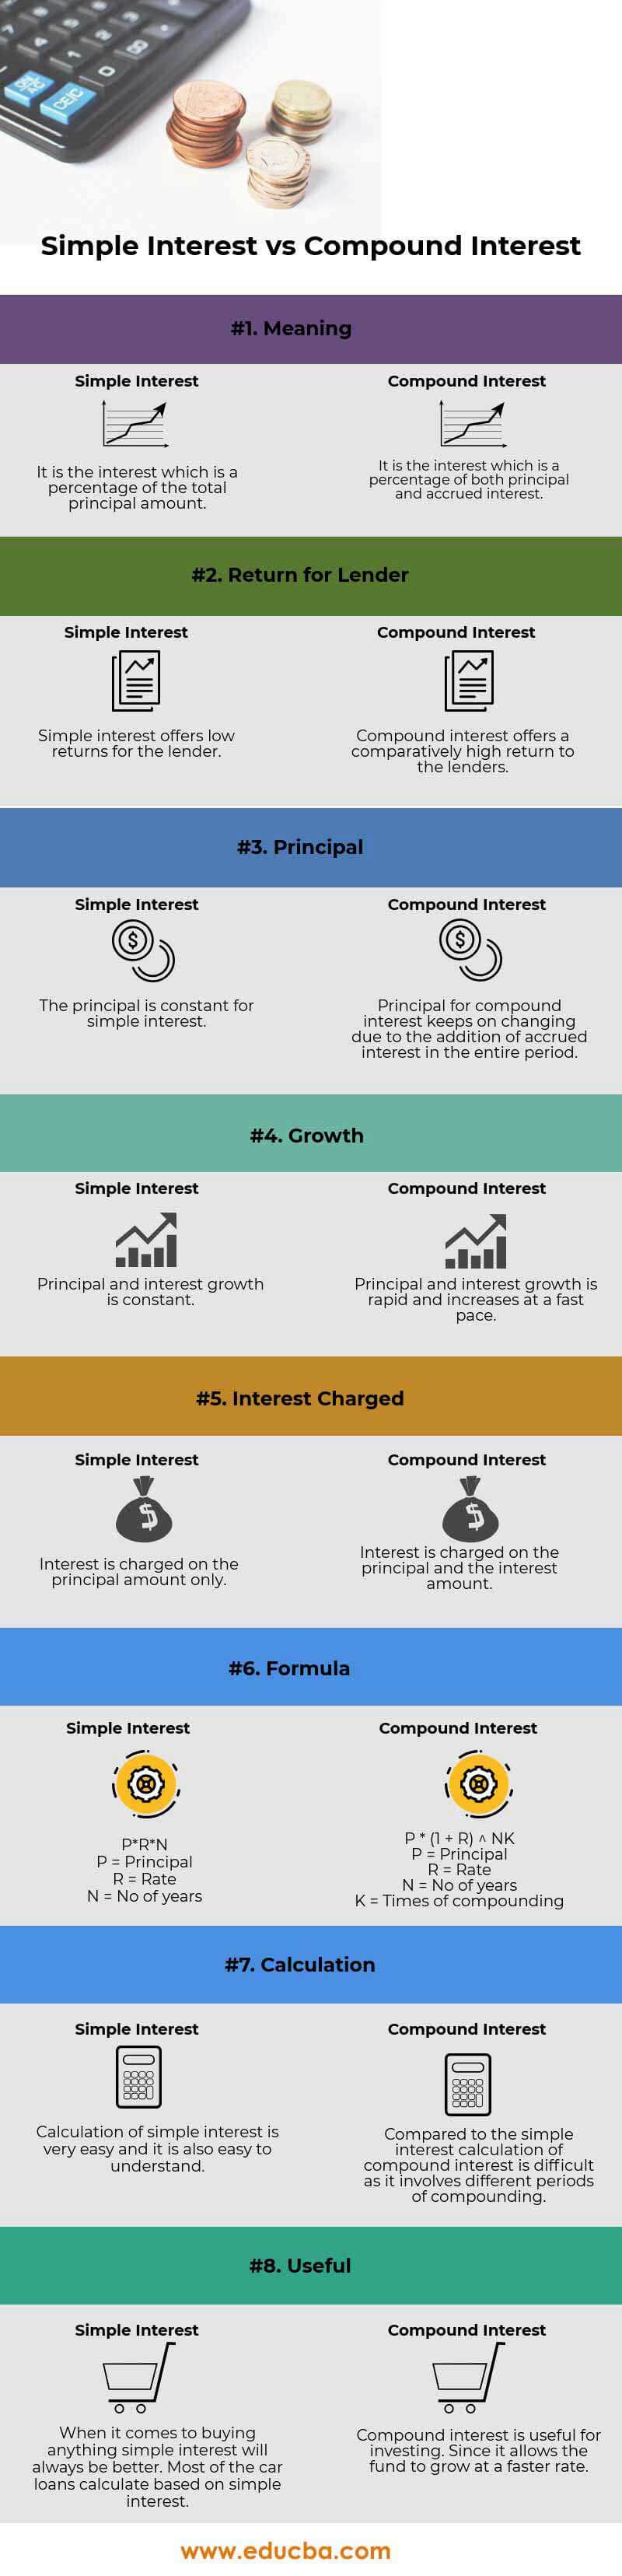 Simple Interest vs Compound Interest info